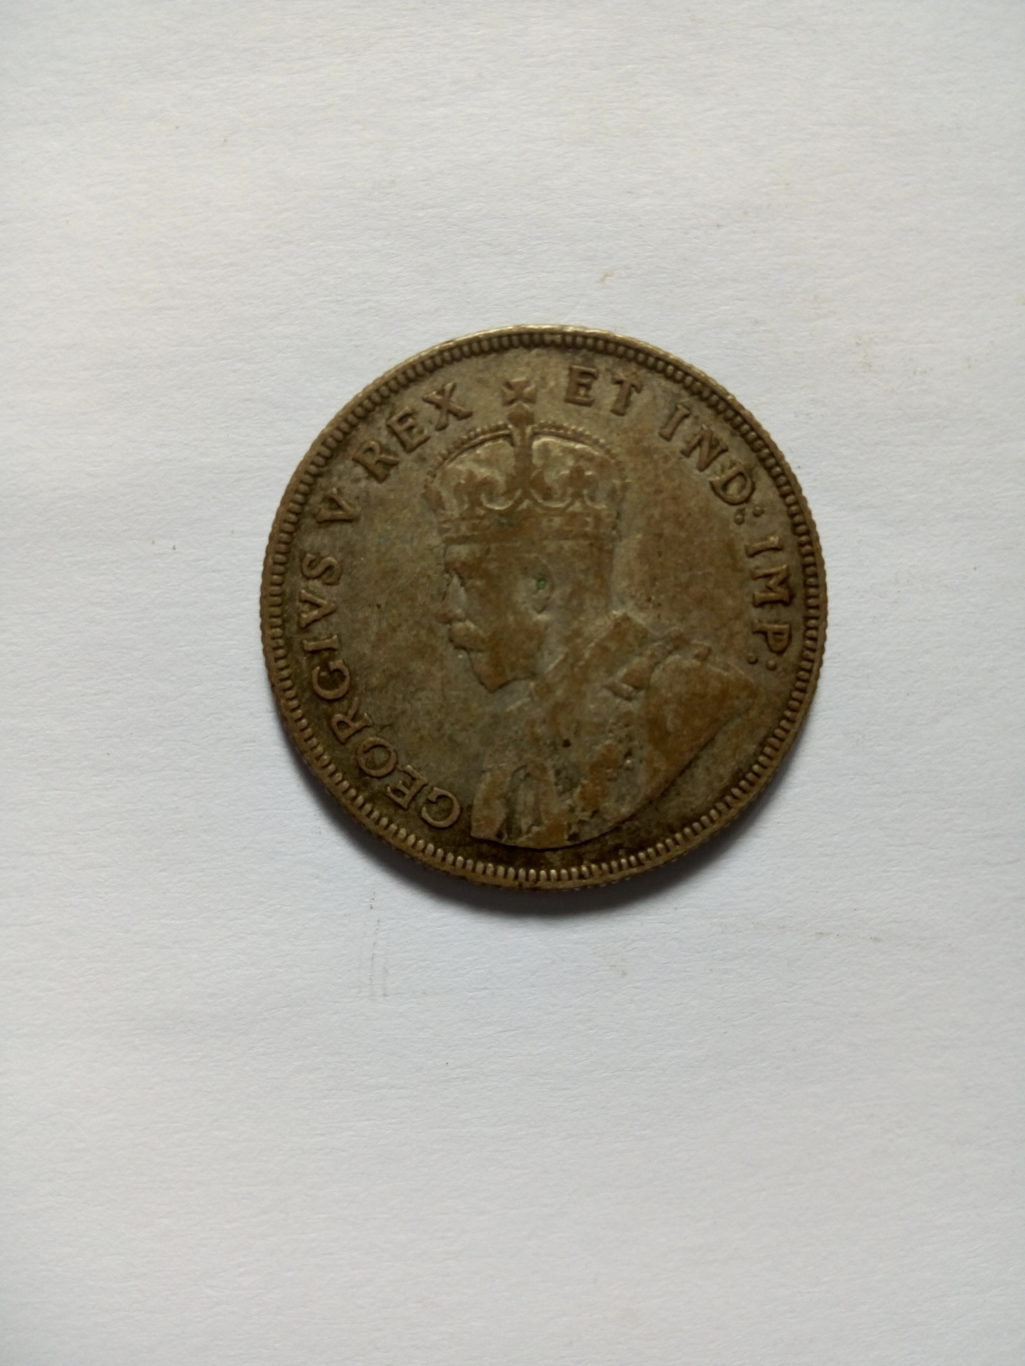 1922_georgivs Rex east Africa 1 shilling